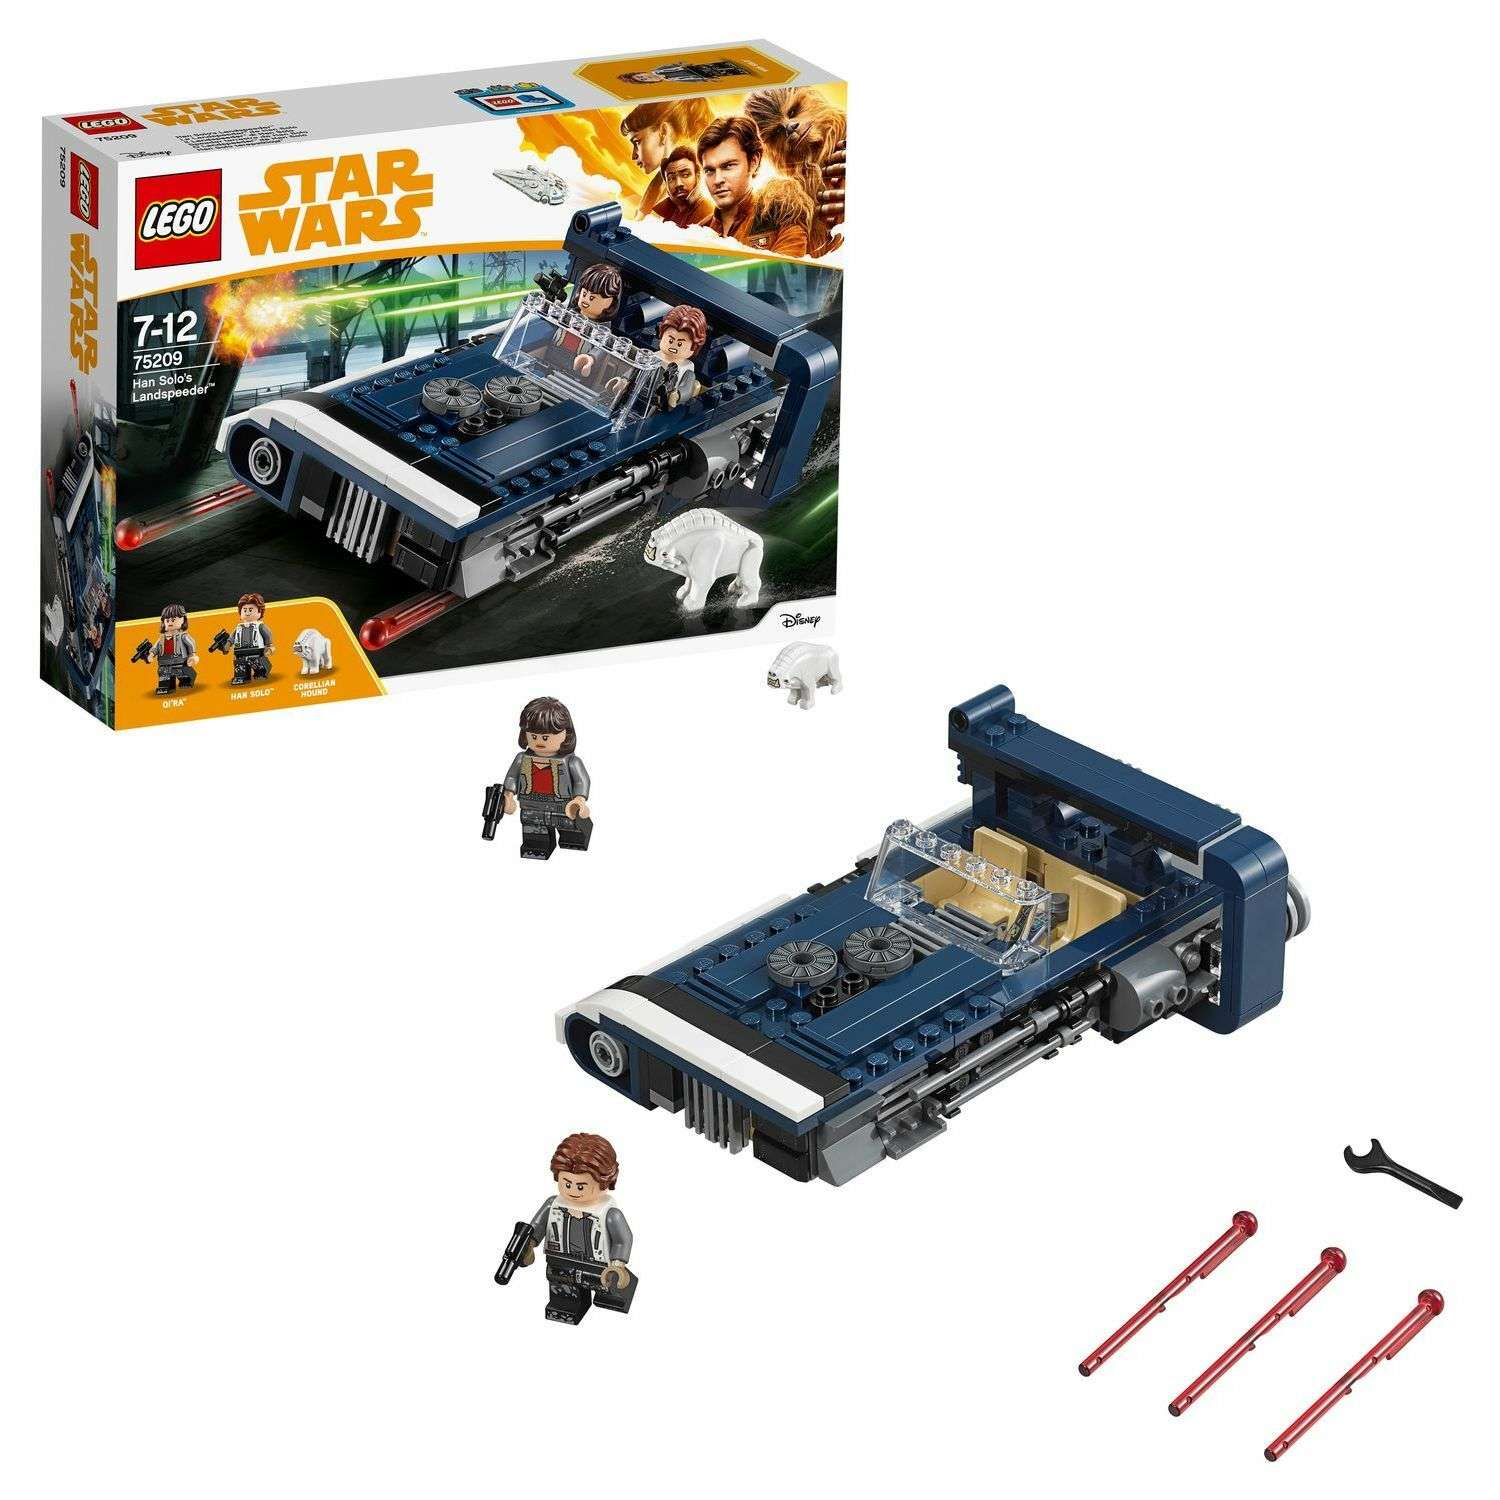 Конструктор LEGO Star Wars Спидер Хана Cоло (75209) - фото 1